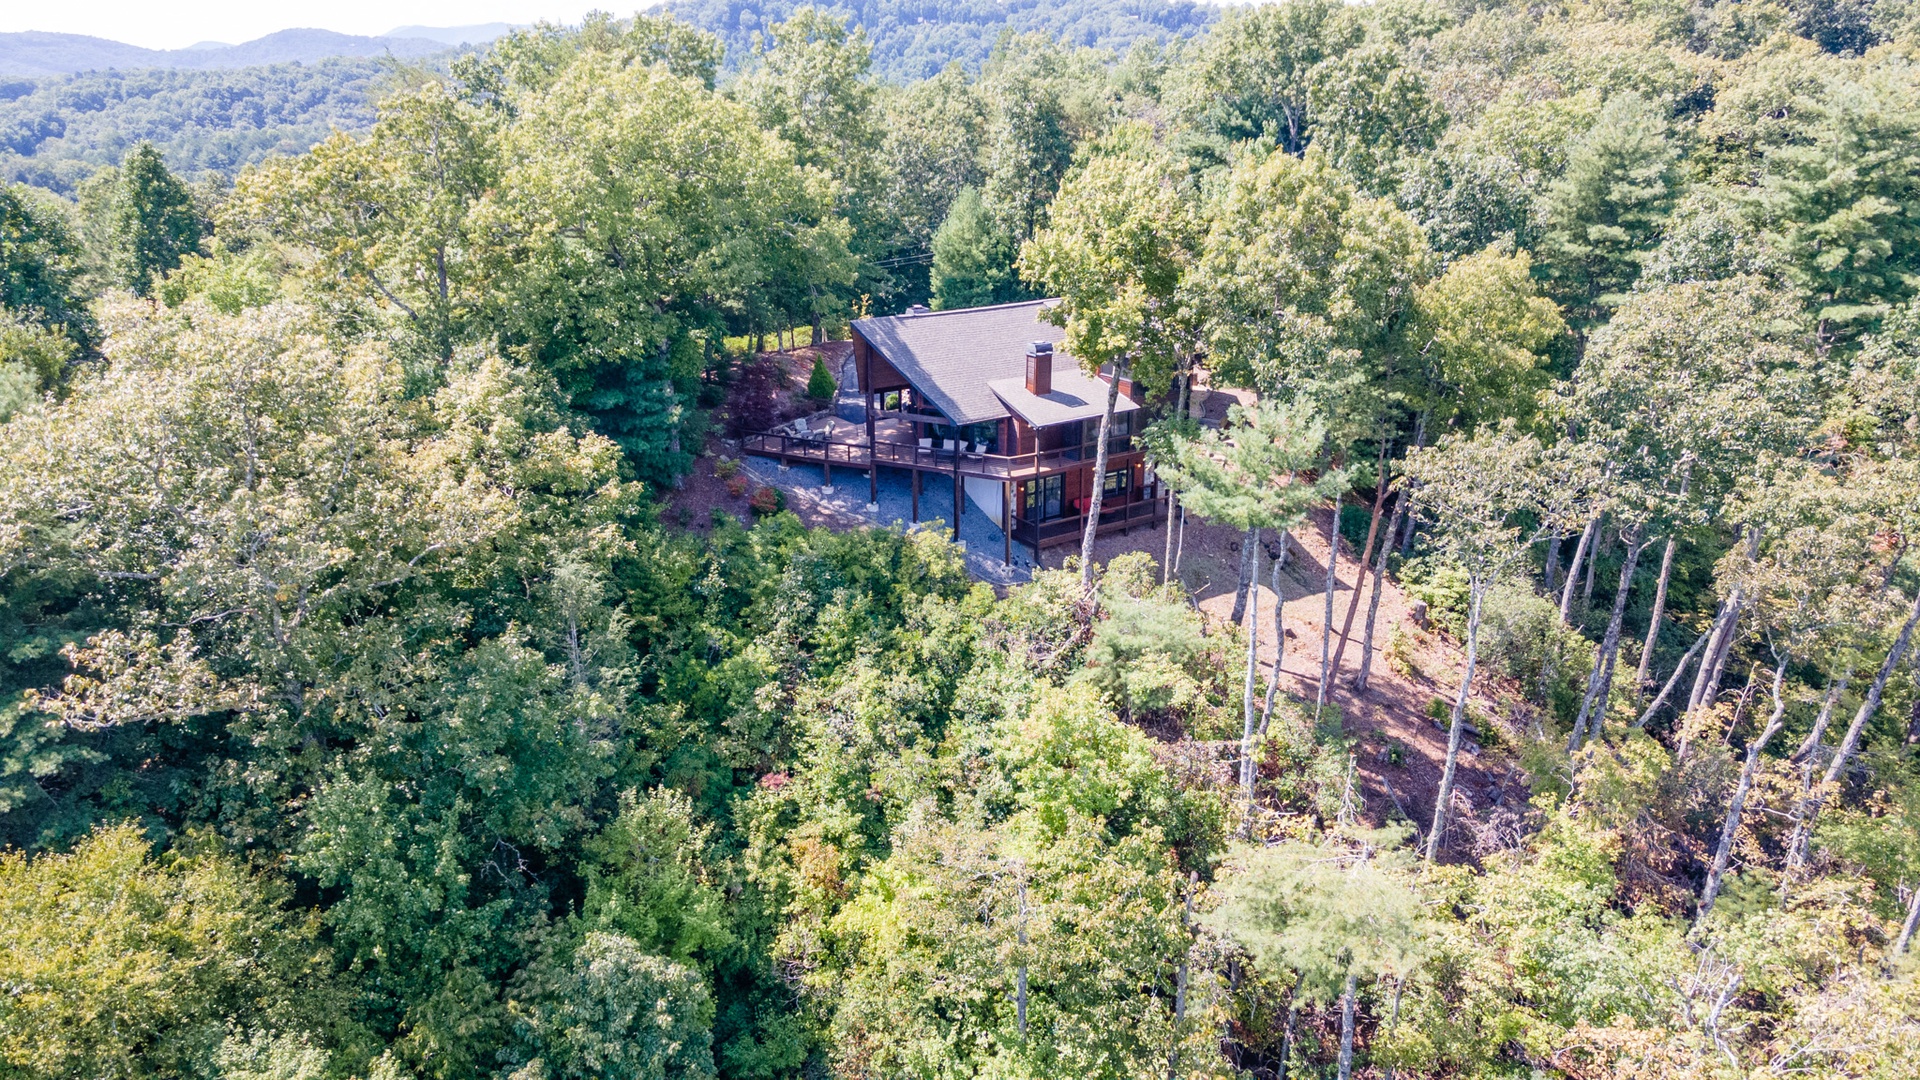 Kricket's Overlook- Aerial view of the cabin